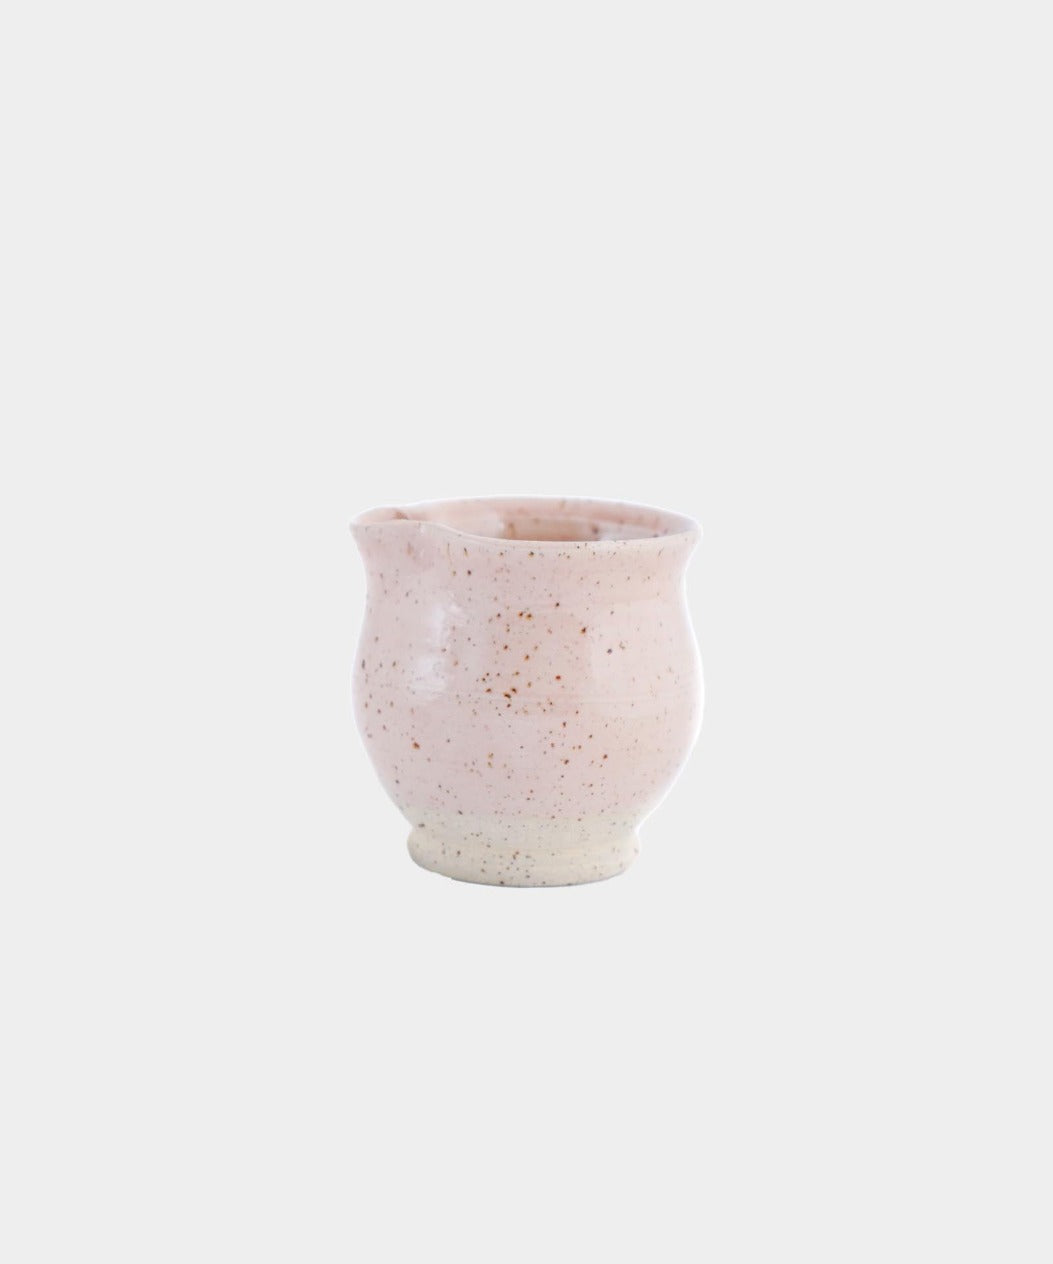 Håndlavet Keramik Flødekande | FLORAL by Vang | Kerama